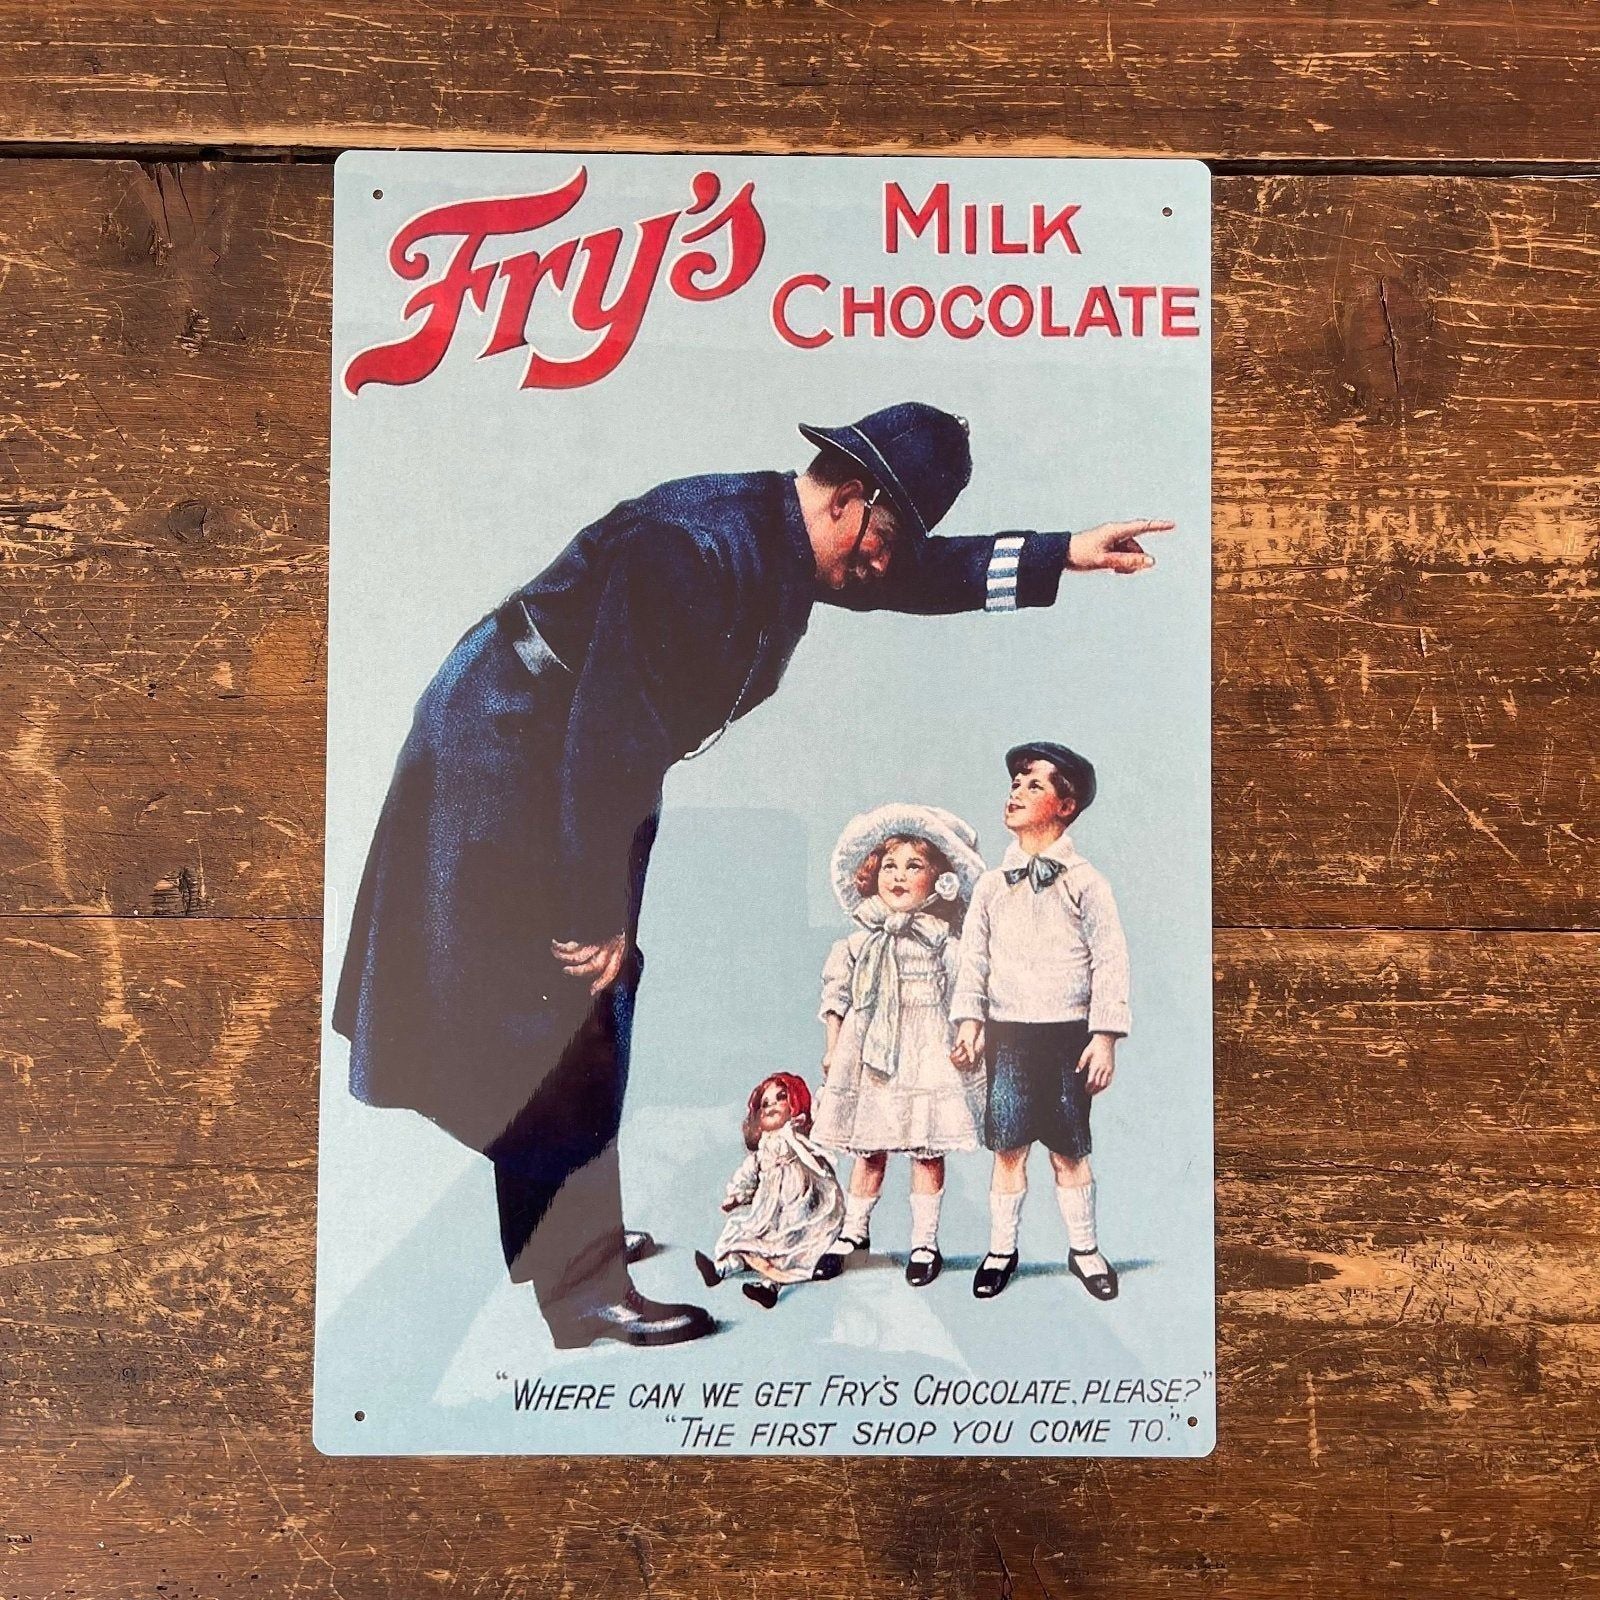 Vintage Metal Sign - Retro Advertising Fry's Milk Chocolates - Ashton and Finch